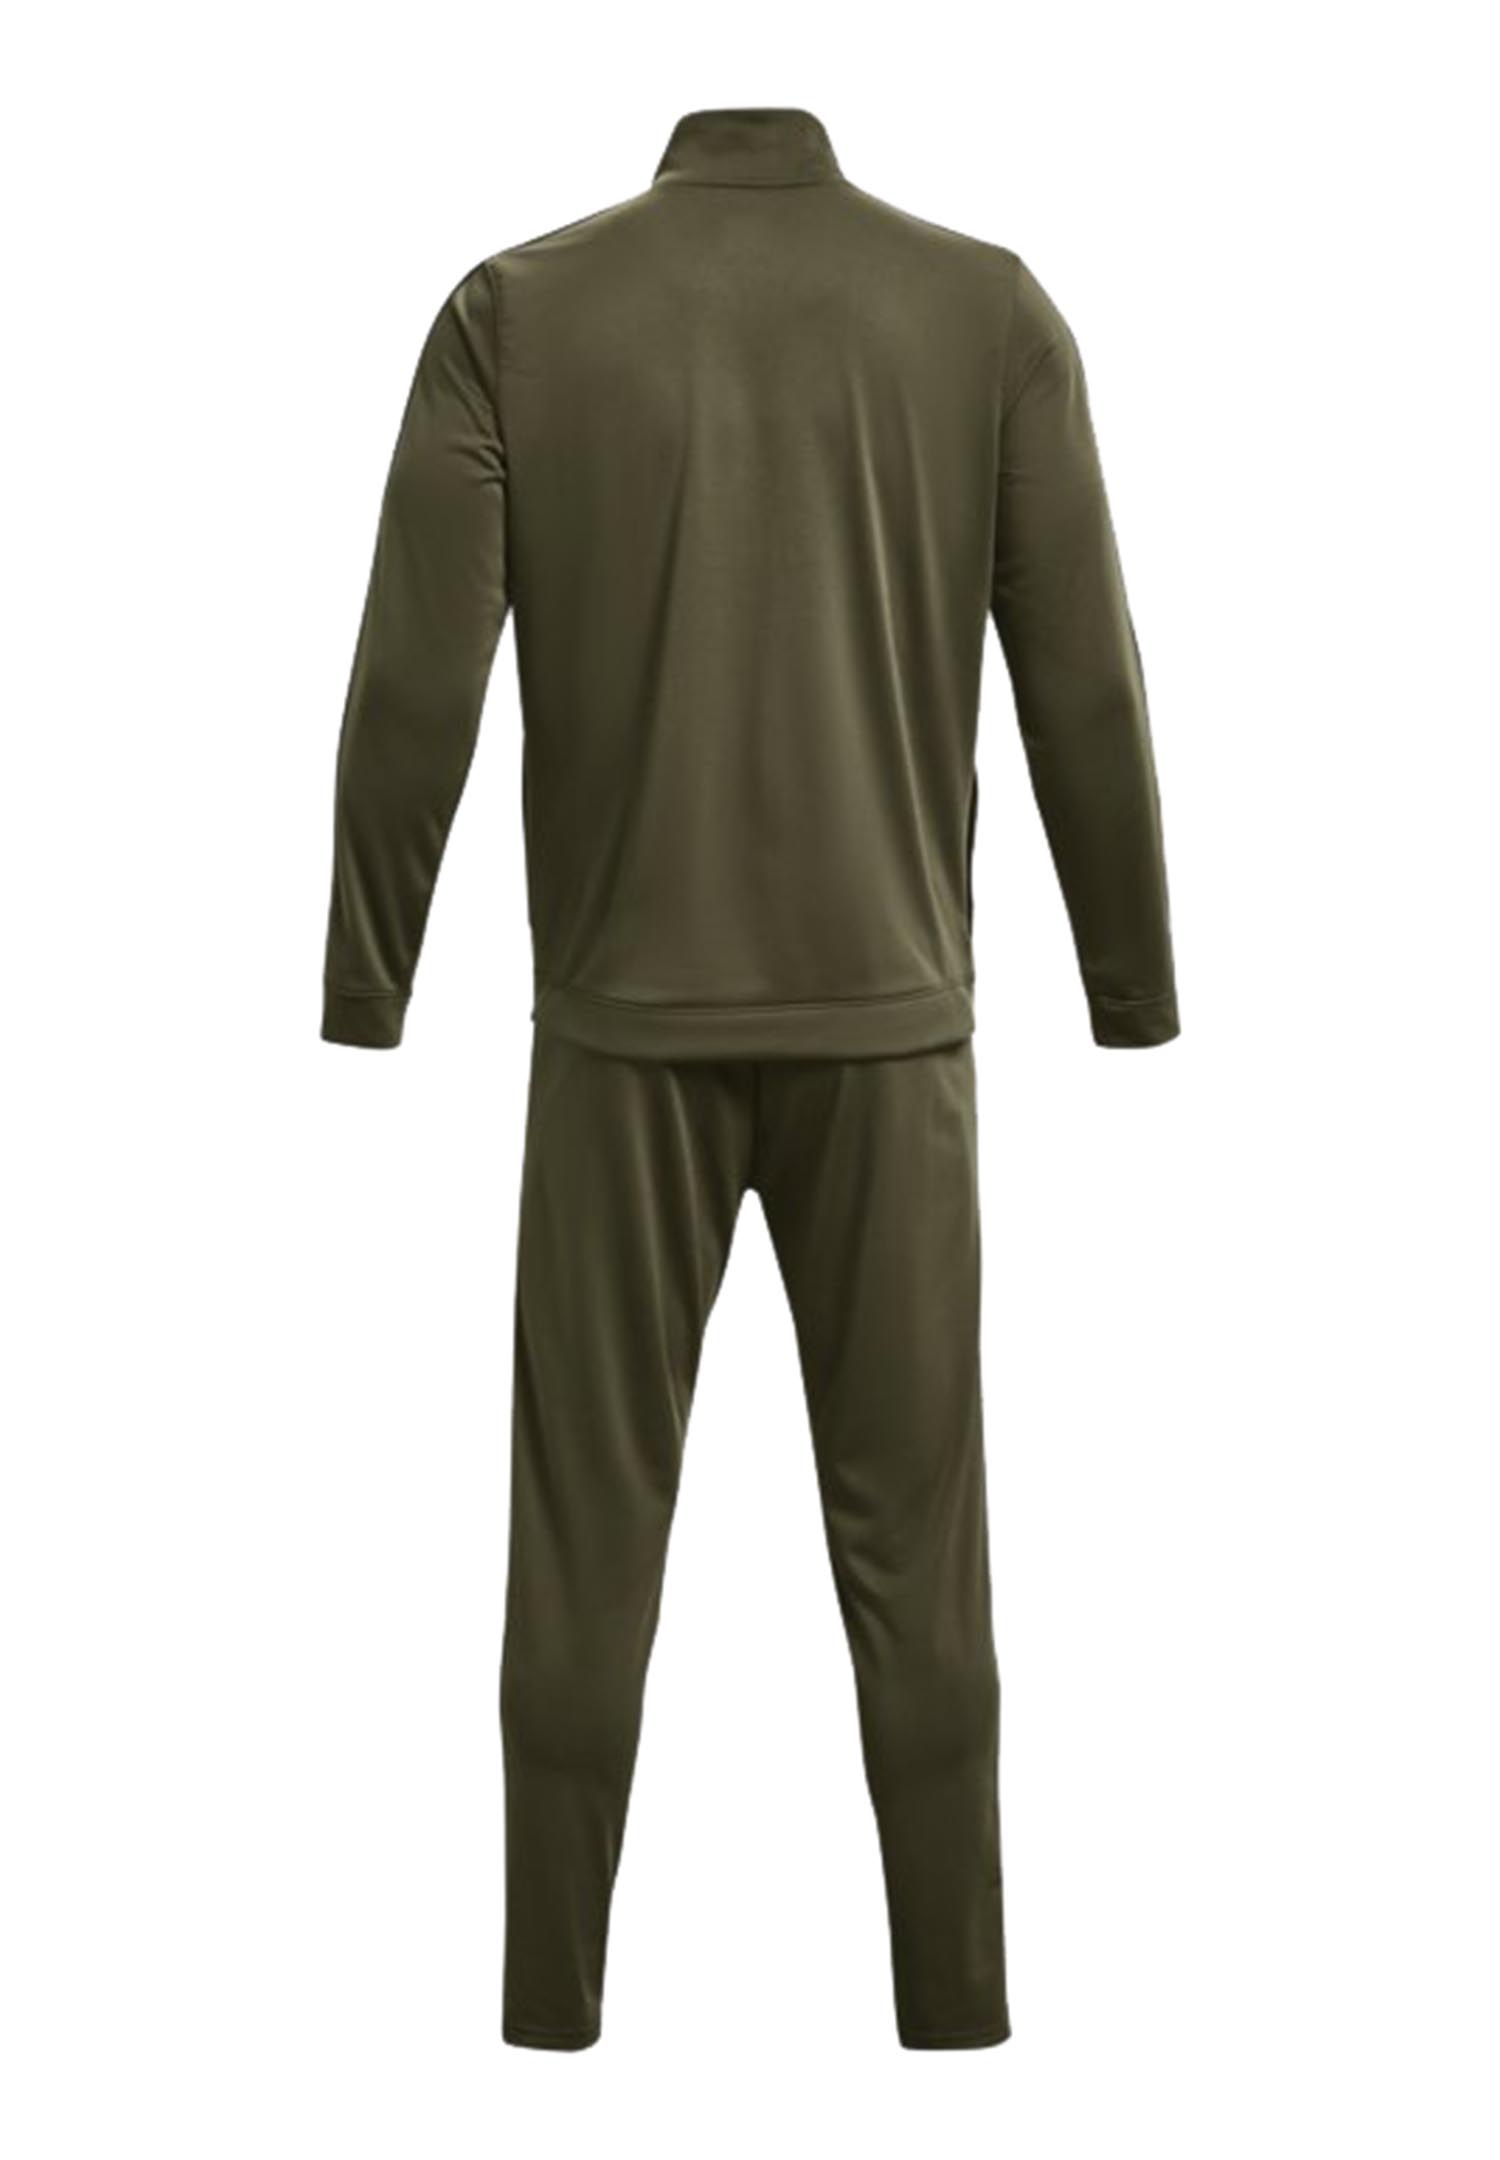 Under Armour Herren Knit Track Suit Trainingsanzug Jogginganzug 1357139 390 grün